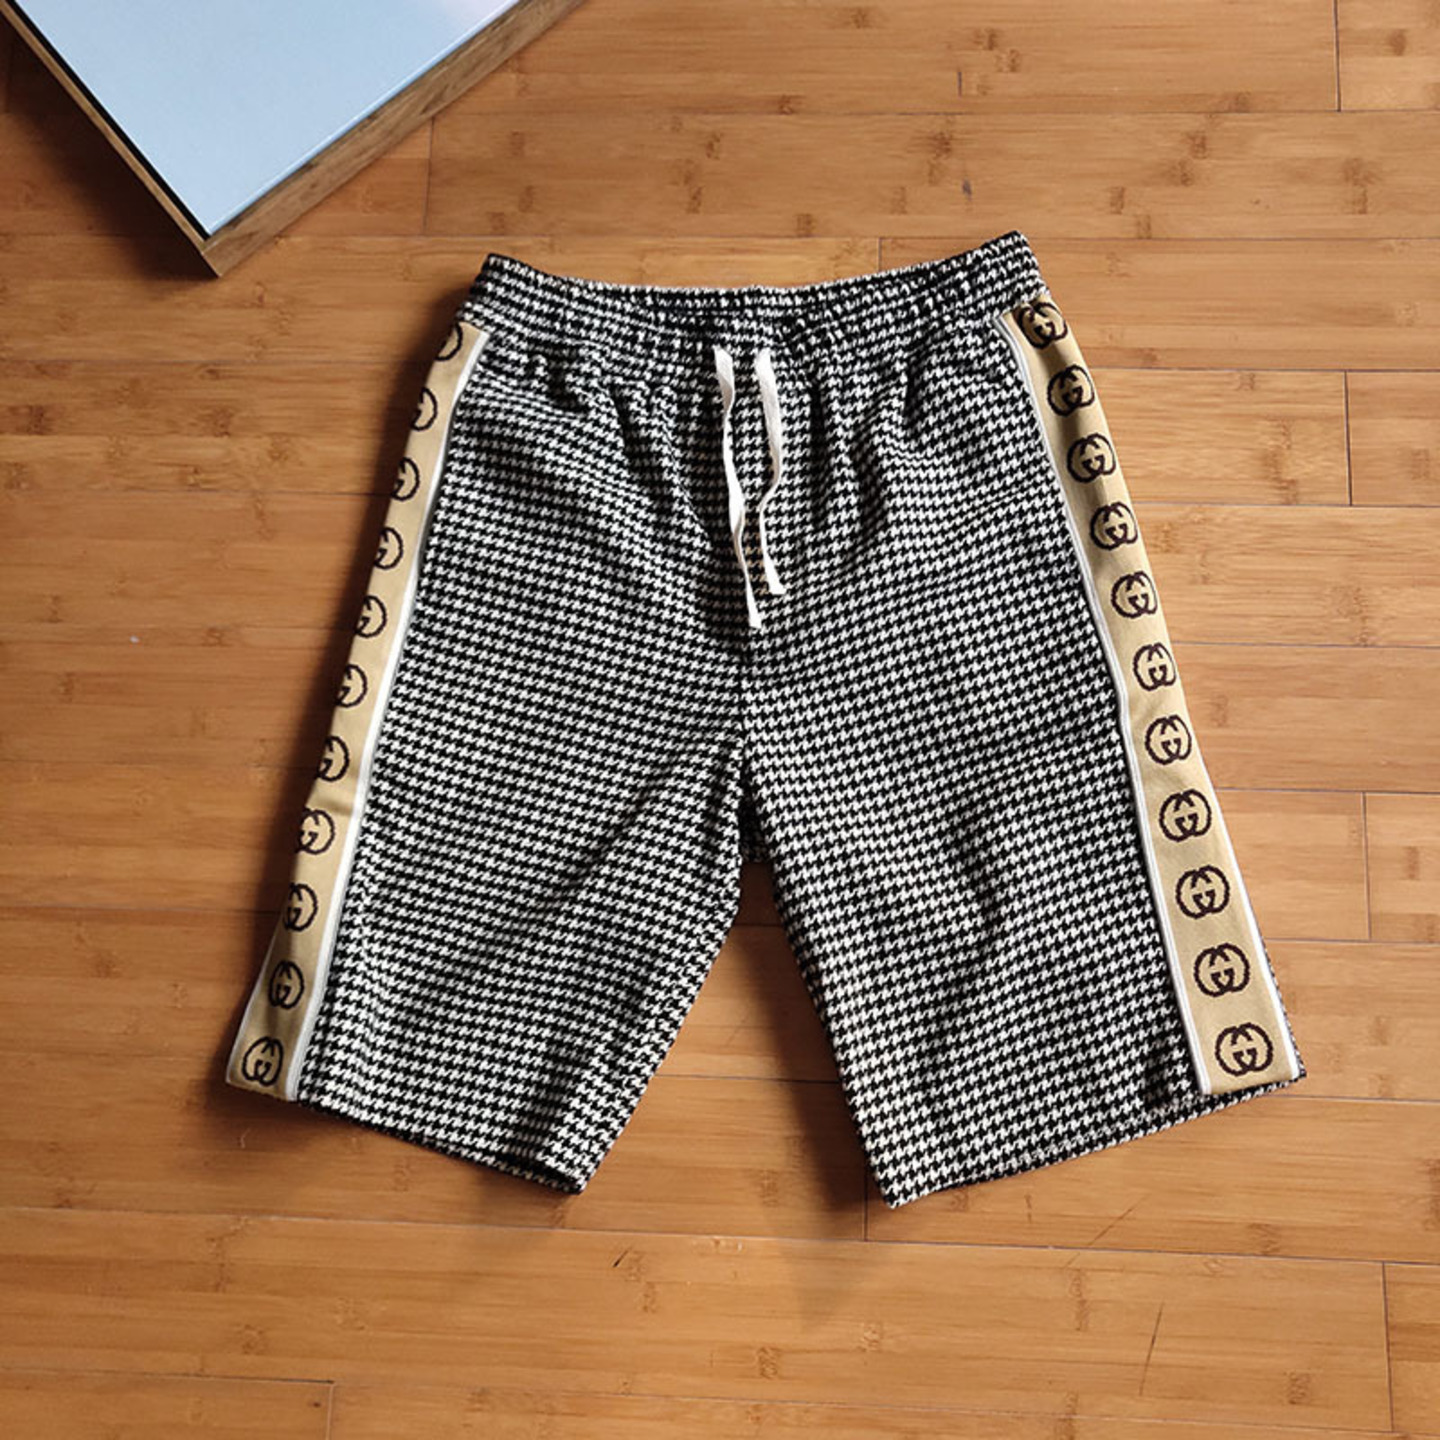 Gucci Houndstooth with Interlocking G stripe shorts